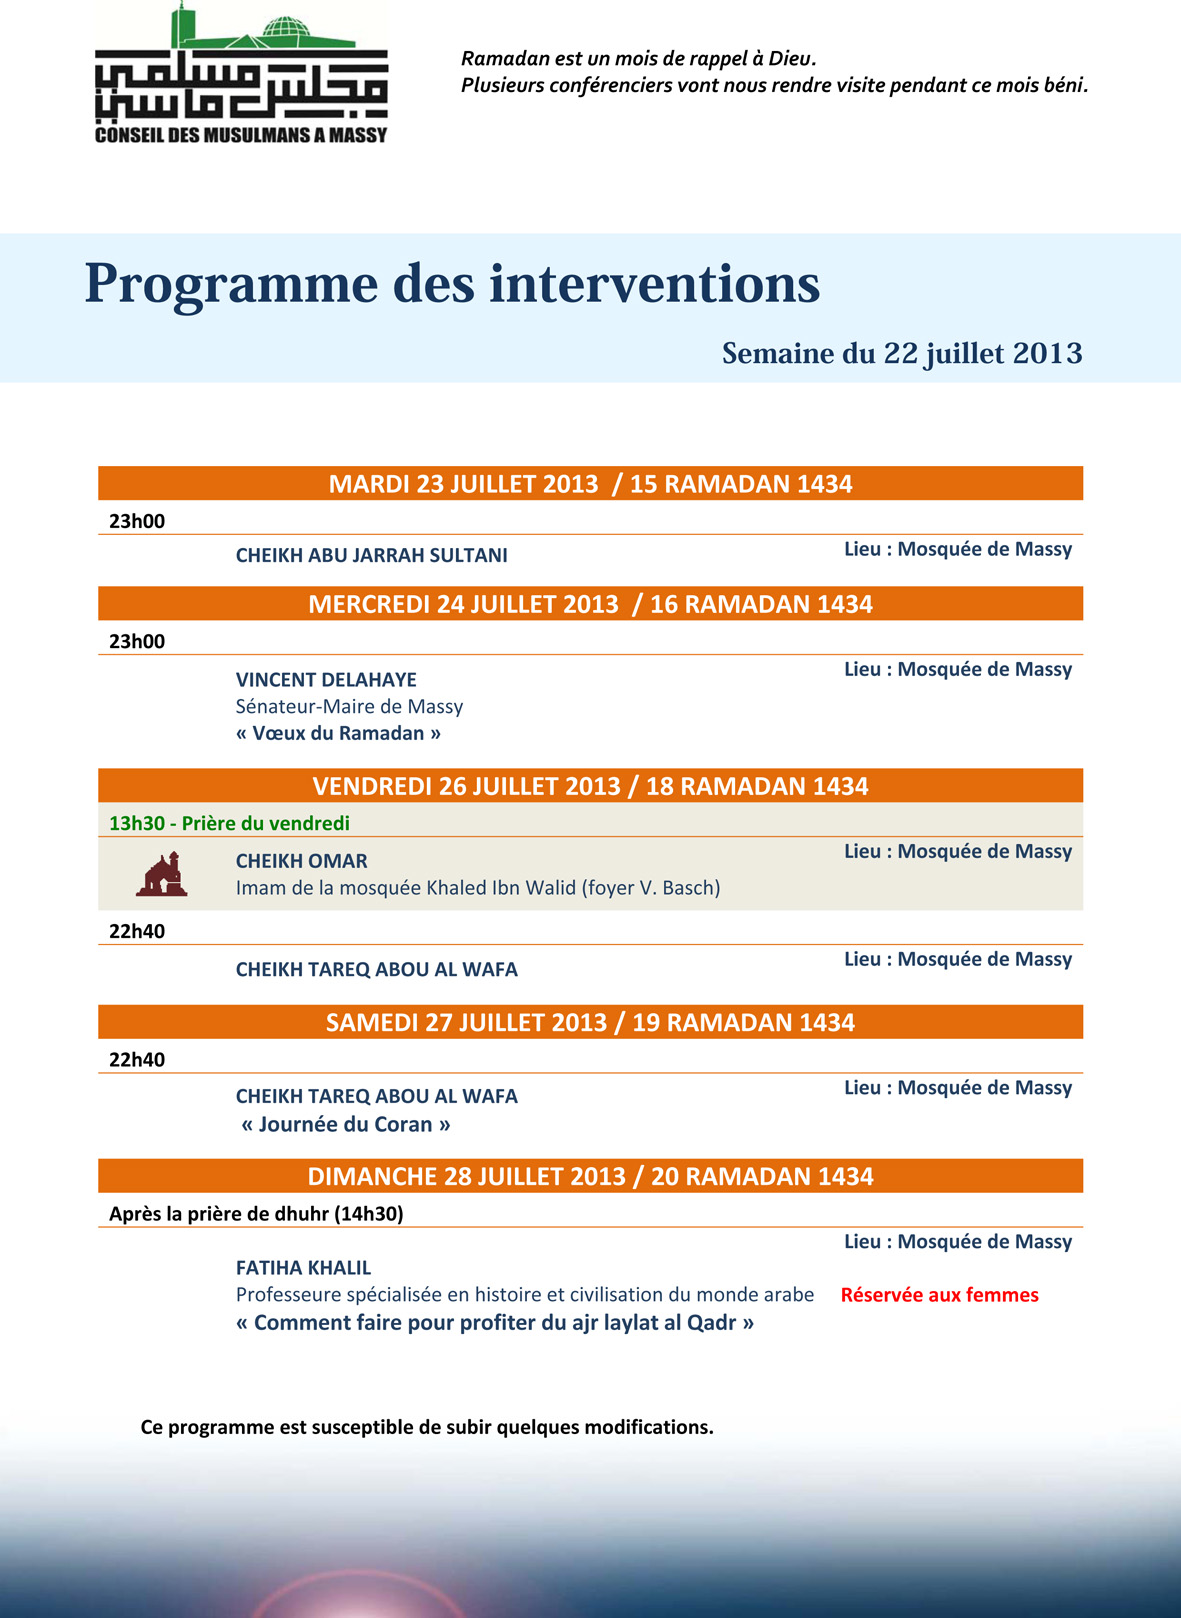 Programme des interventions - Semaine du 22 juillet 2013